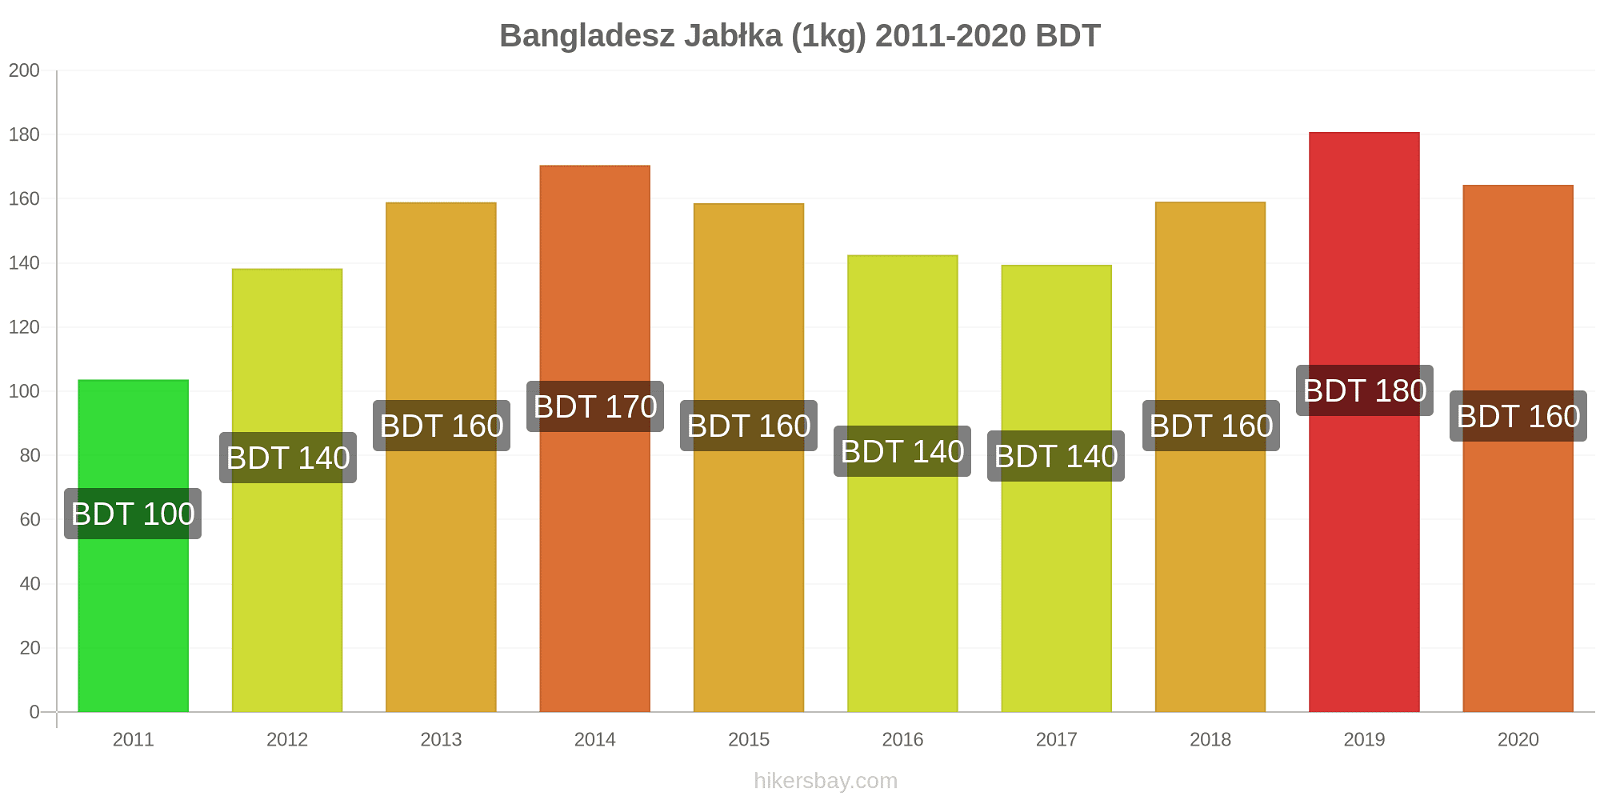 Bangladesz zmiany cen Jabłka (1kg) hikersbay.com